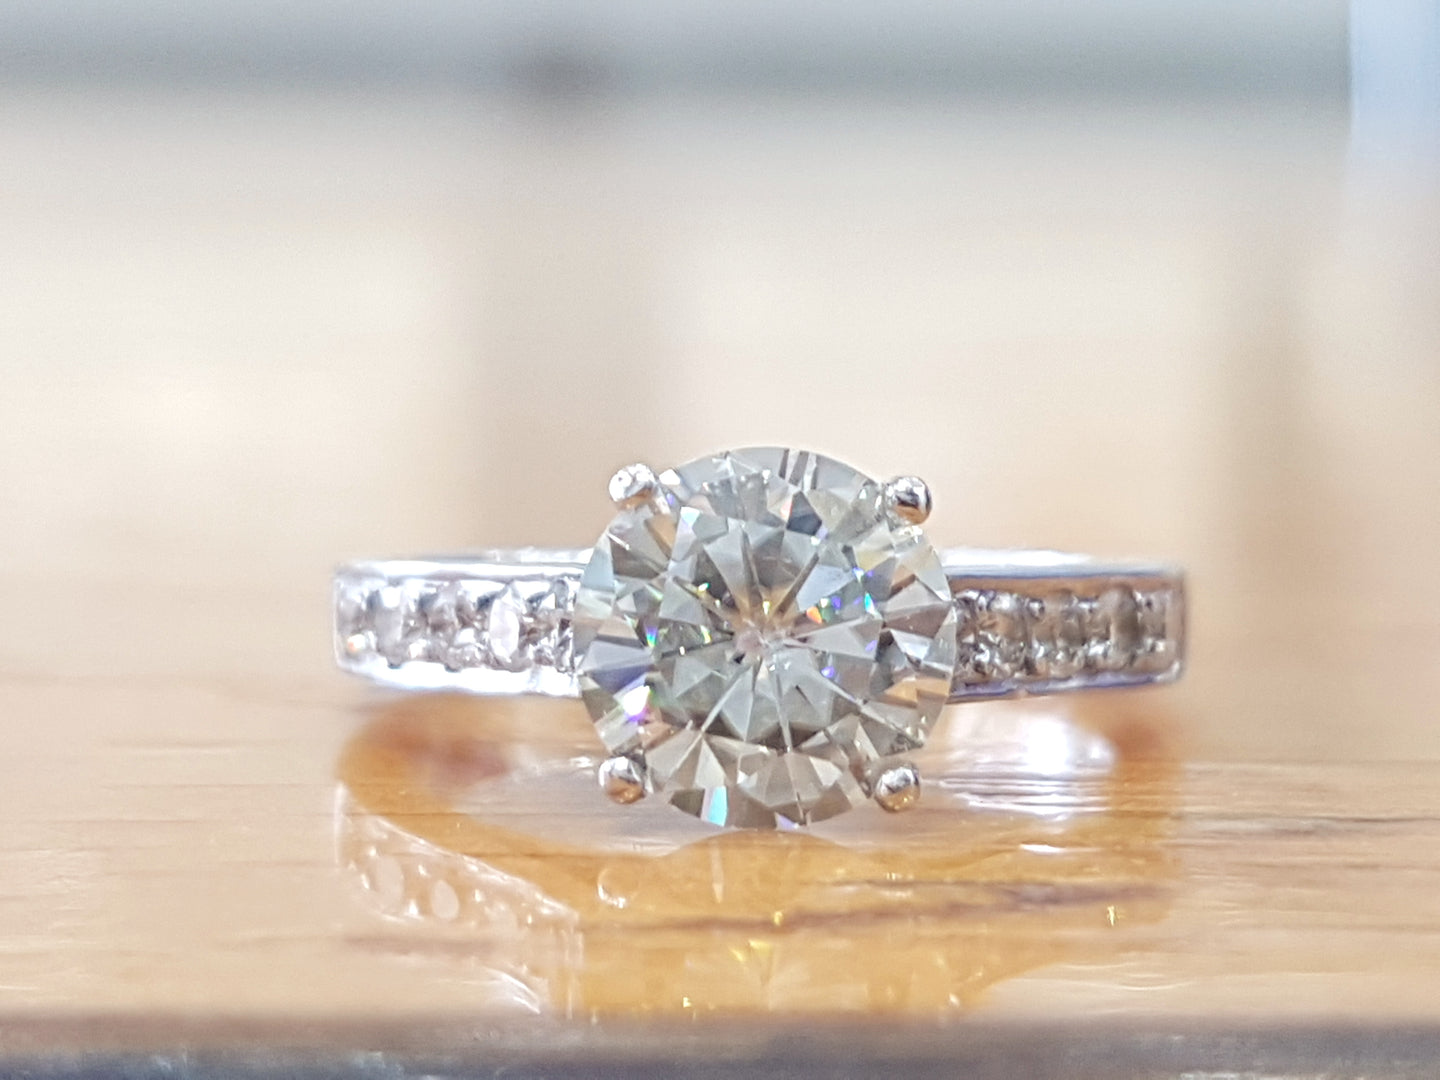 1.5 TCW 14K White Gold Diamond Engagement Ring